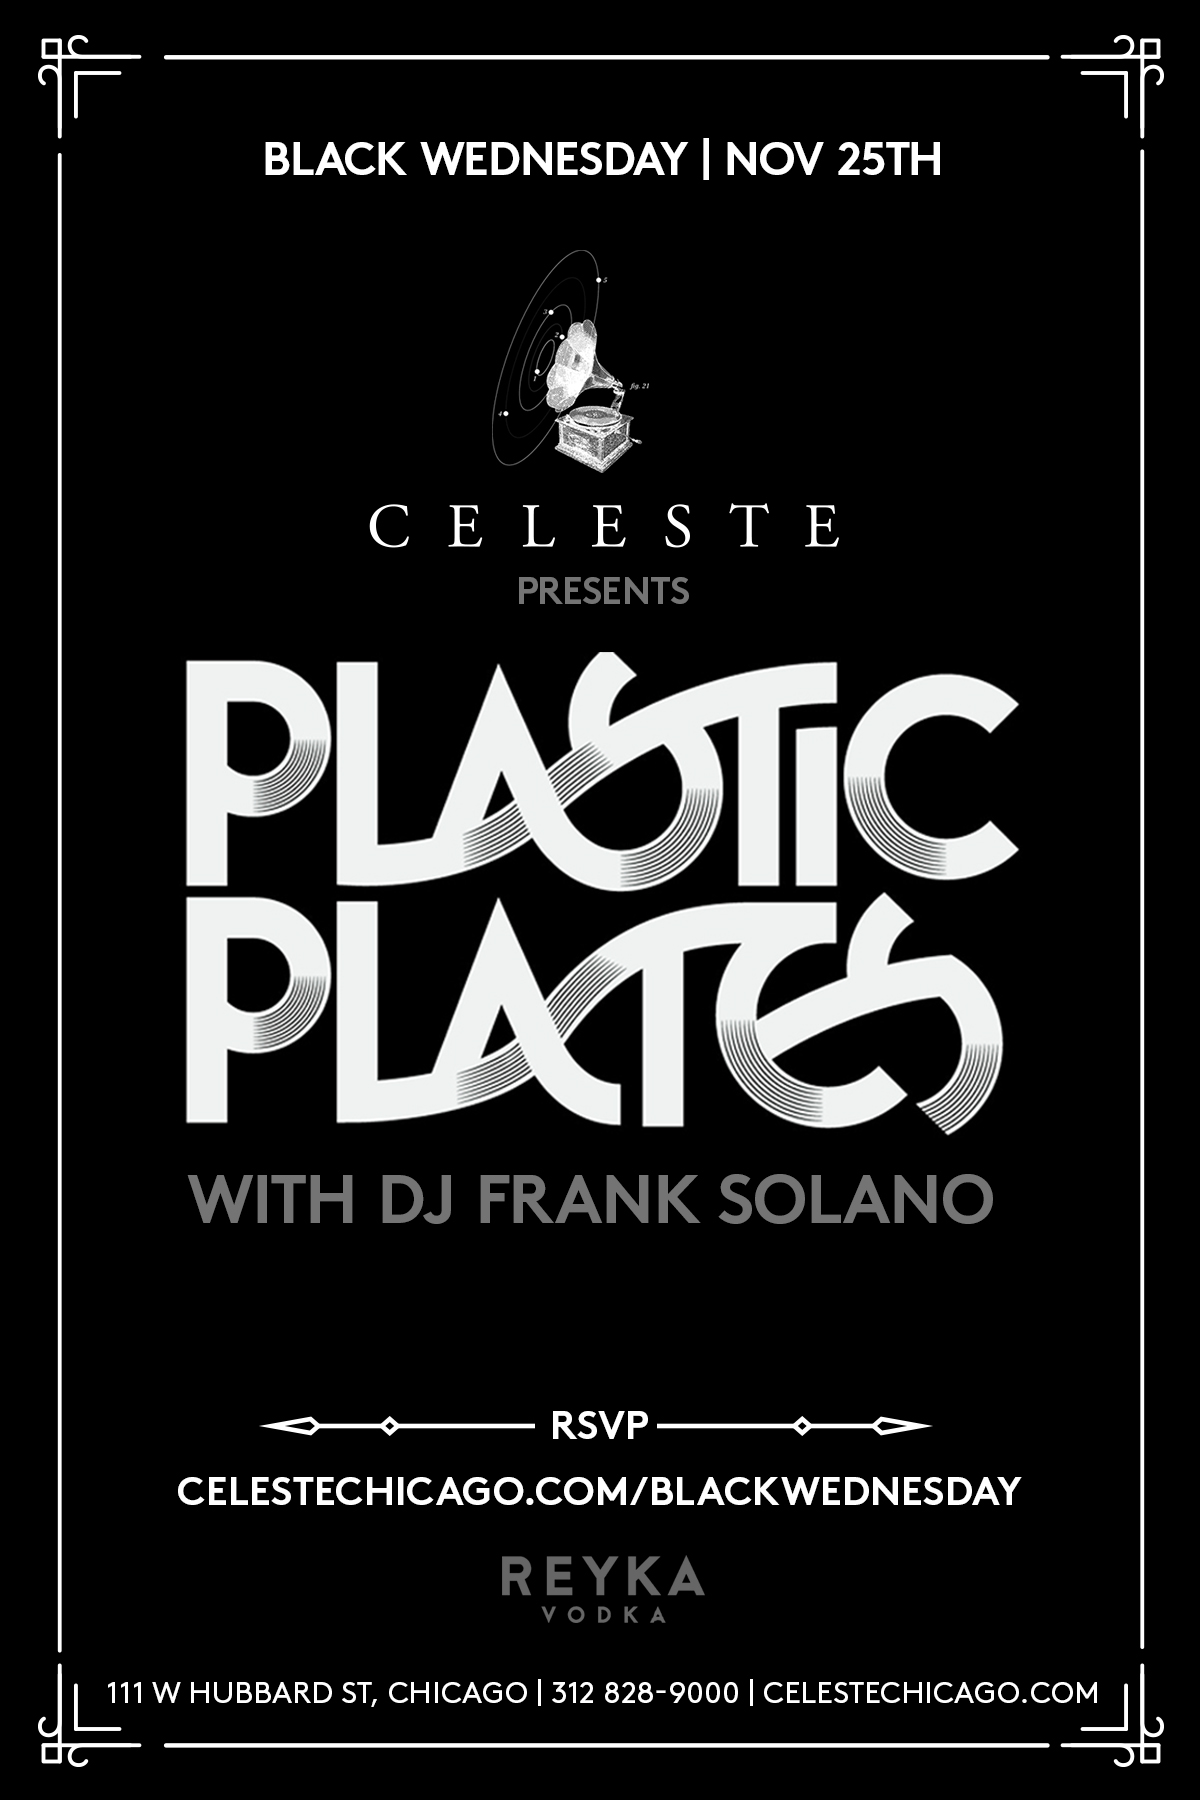 Celeste Event Promotions